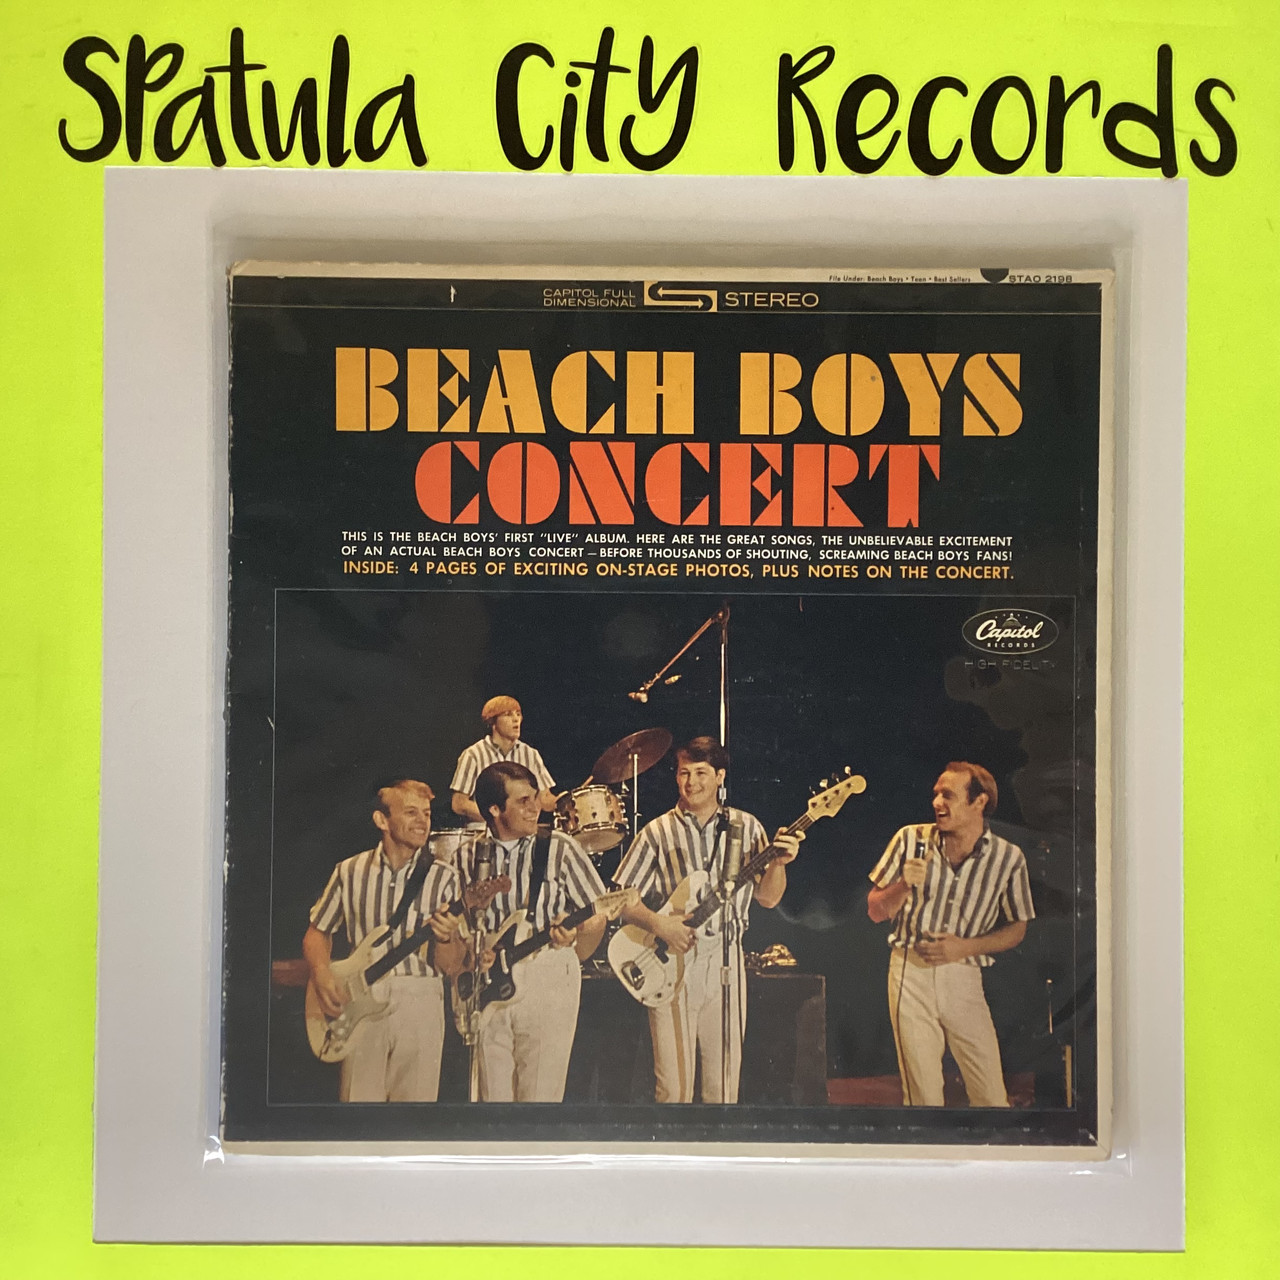 The Beach Boys - Beach Boys Concert -  vinyl record album LP